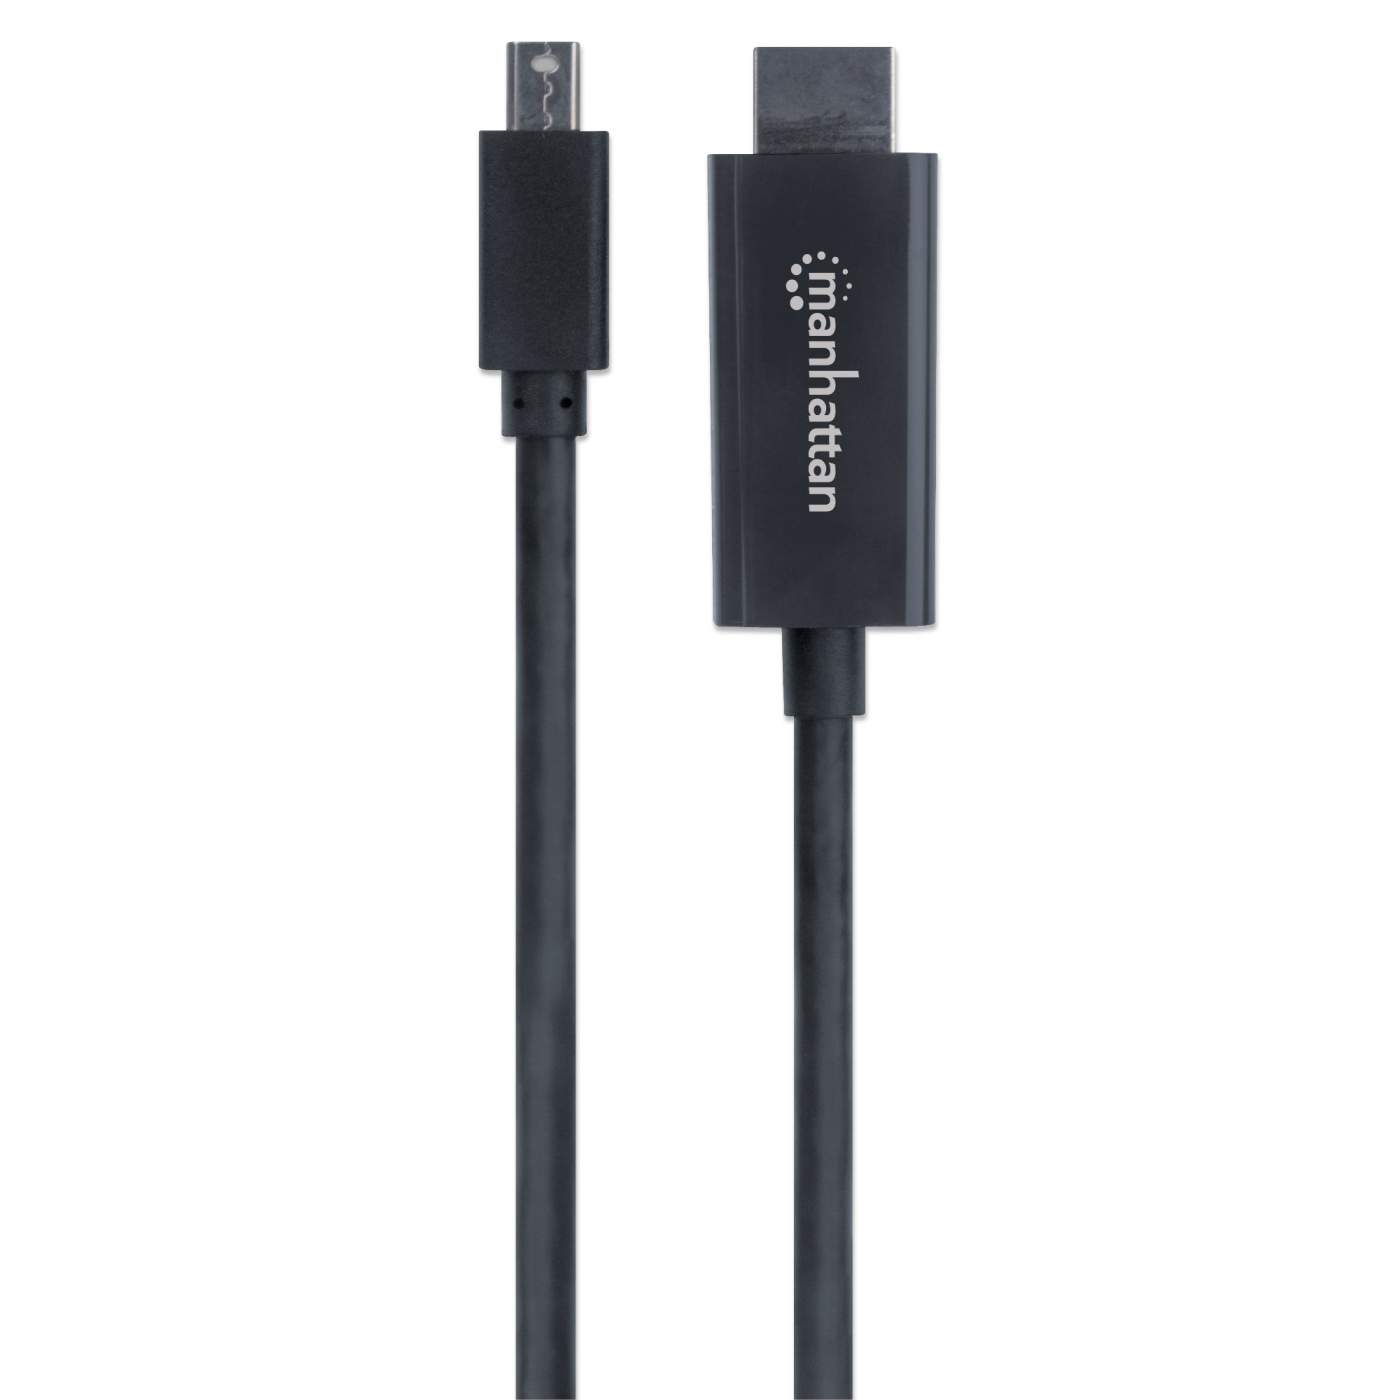 4K@60Hz Mini DisplayPort to HDMI Cable Image 4